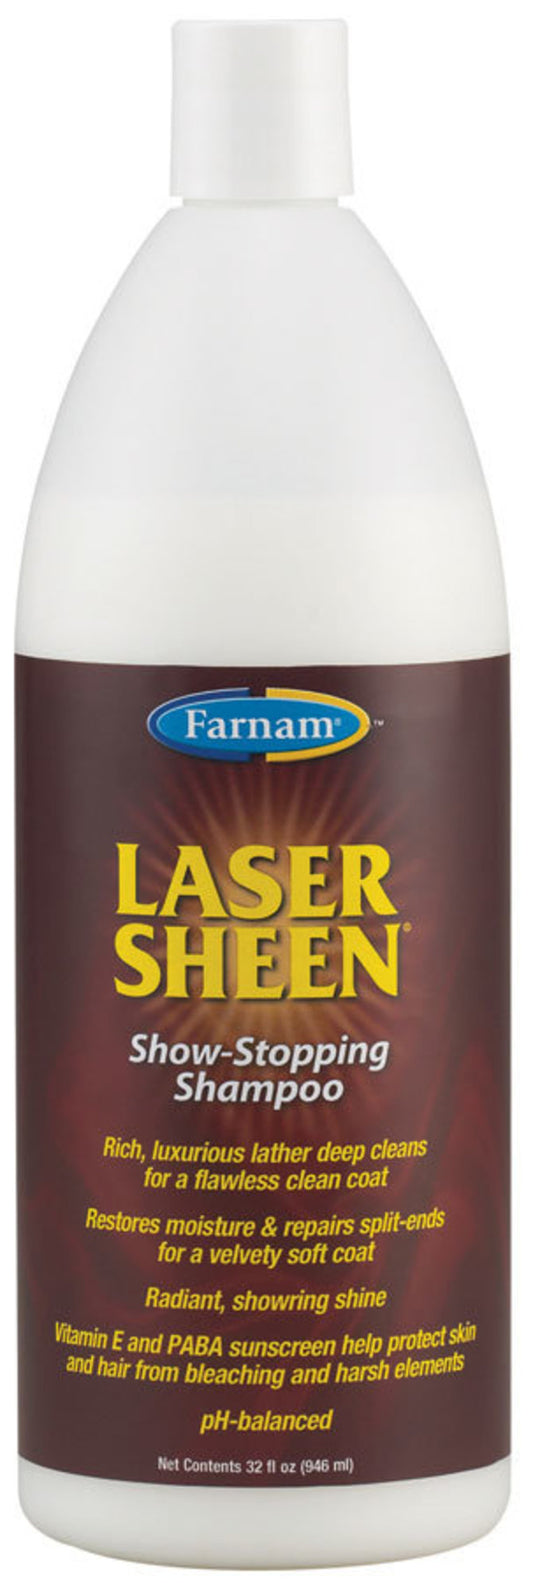 Laser Sheen Show-Stopping Shampoo